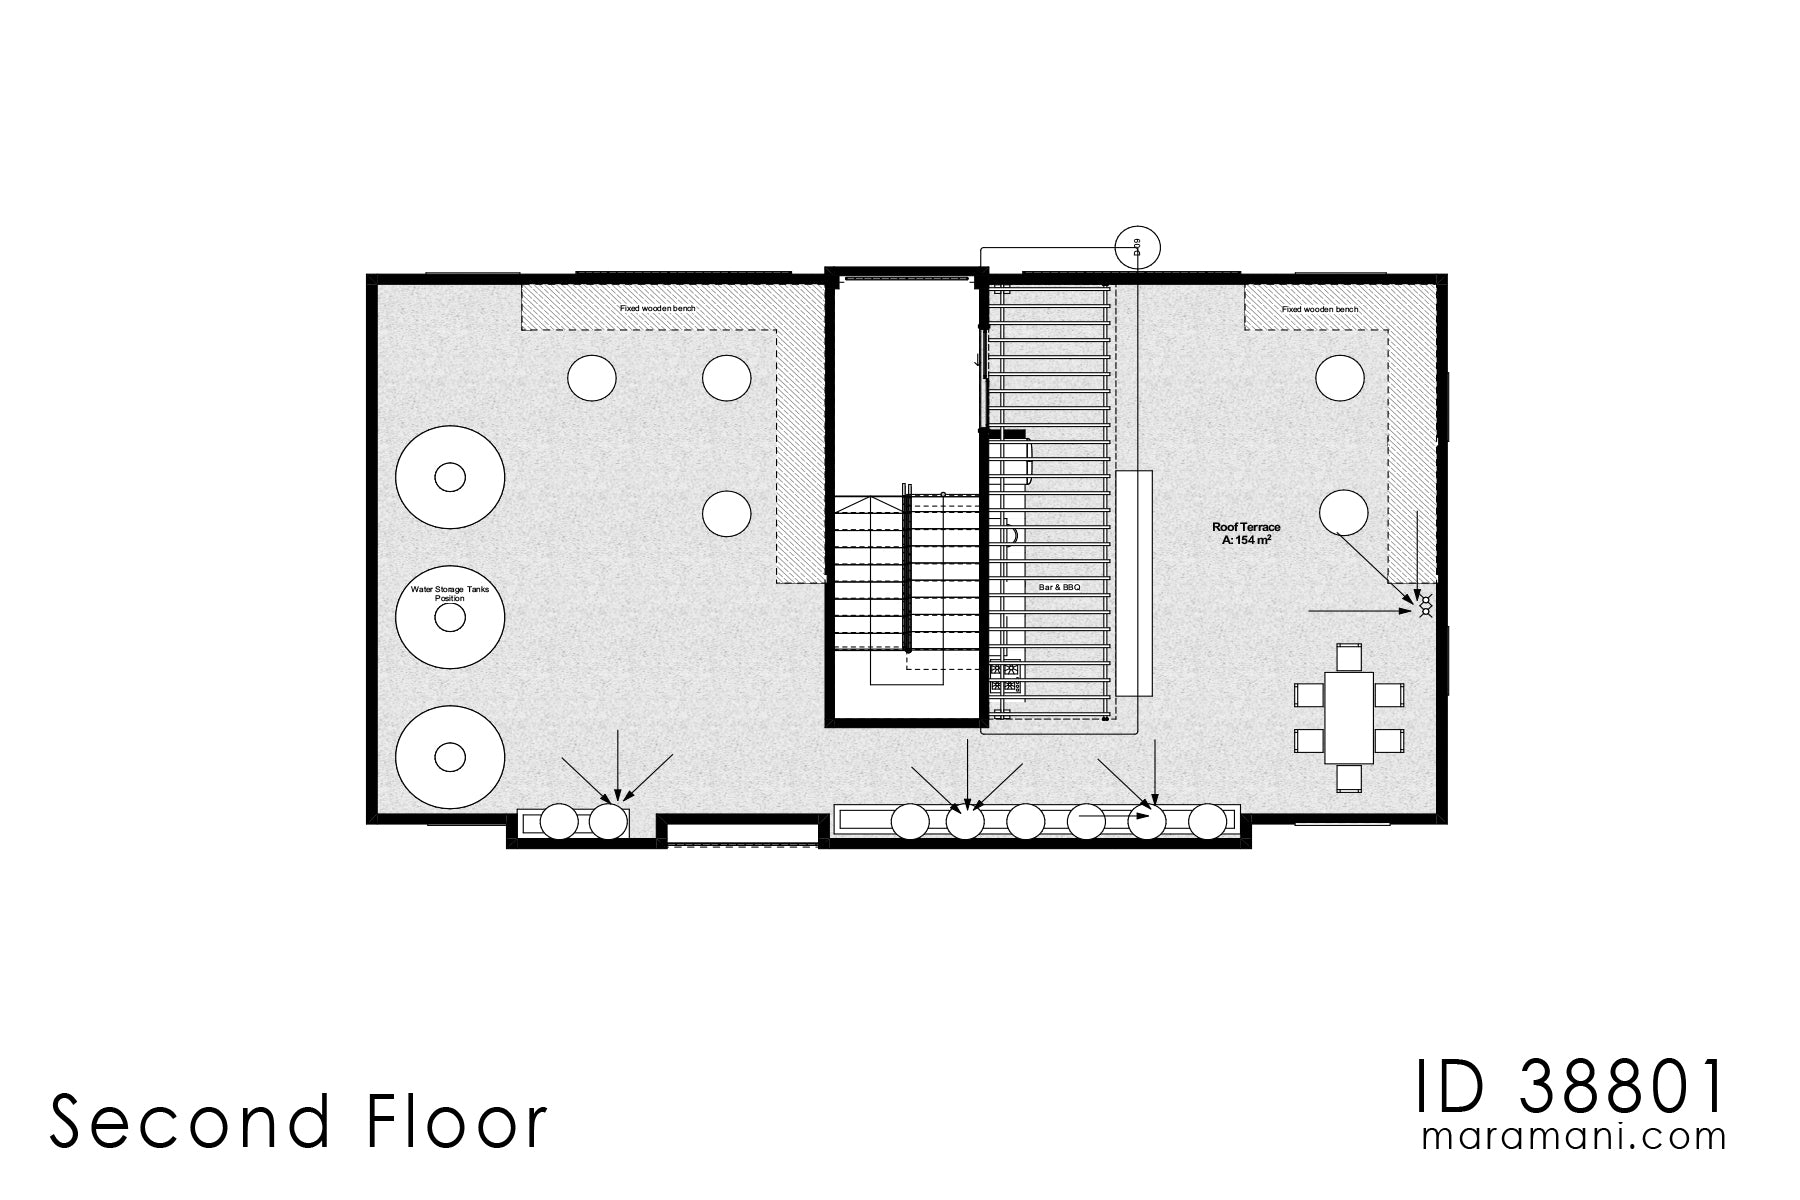 Fourplex 2-Bedroom apartment House Plan - ID 38801